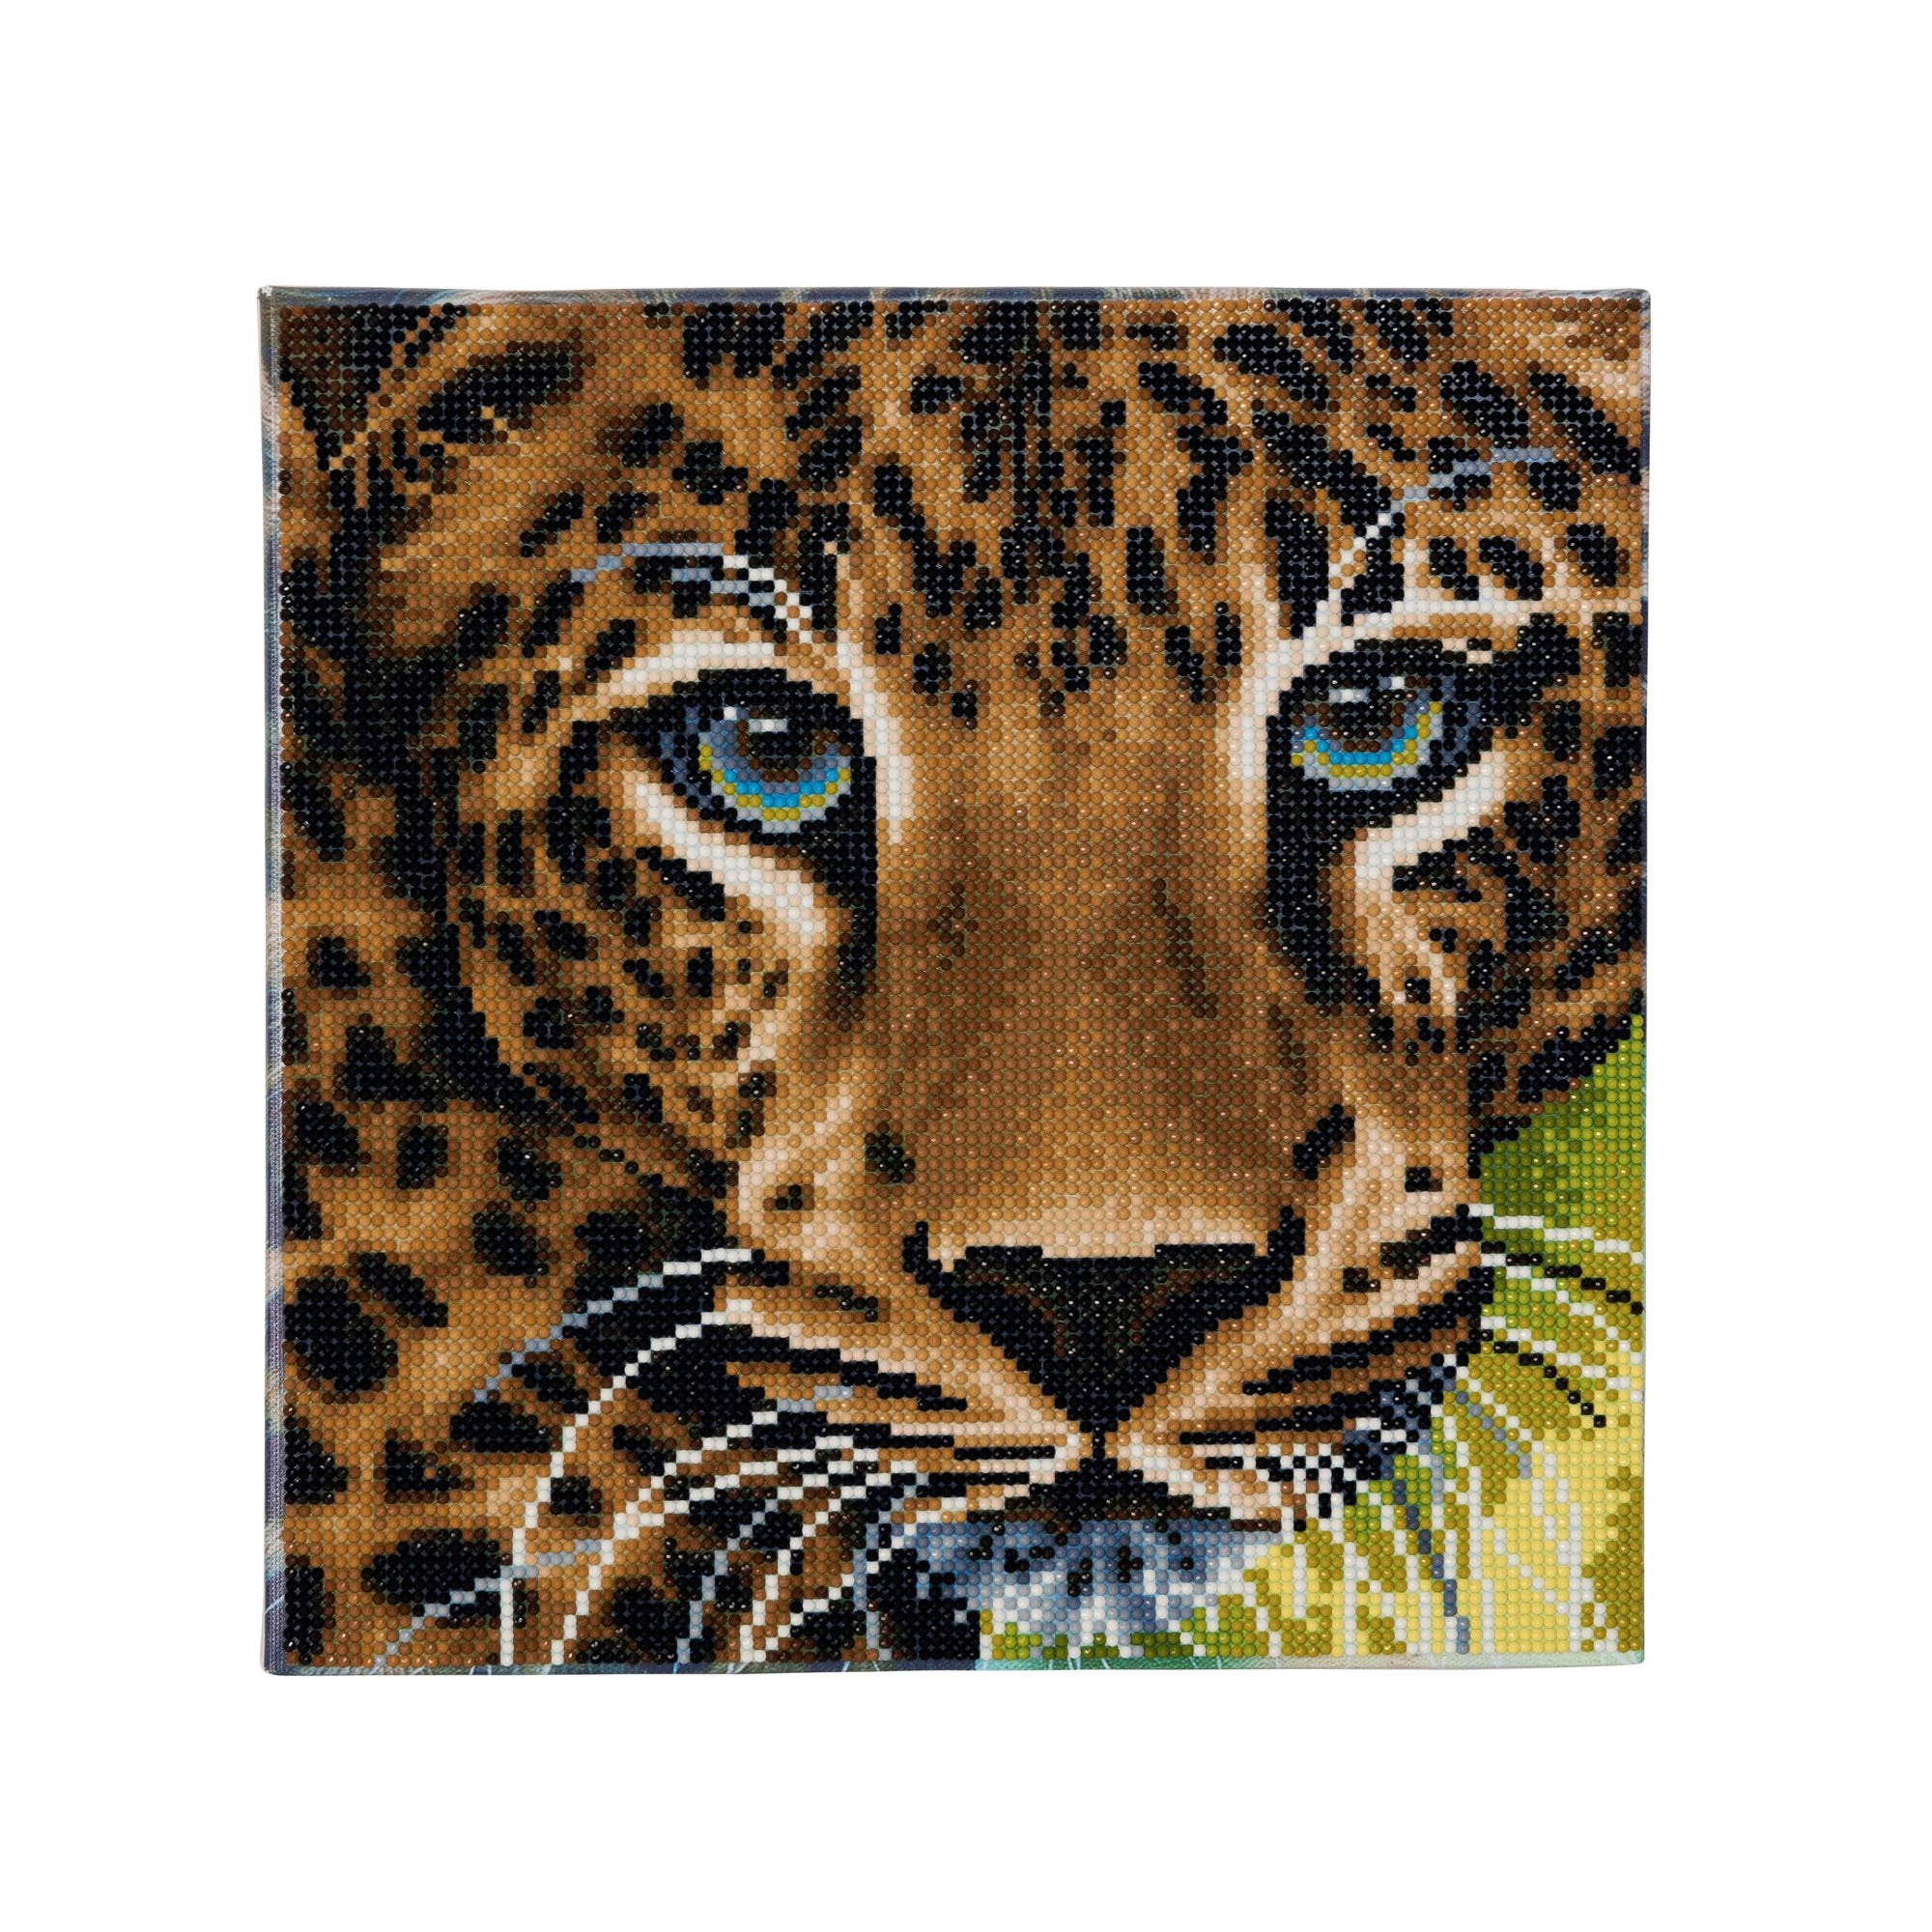 Leopard Crystal Art Canvas, 30X30cm